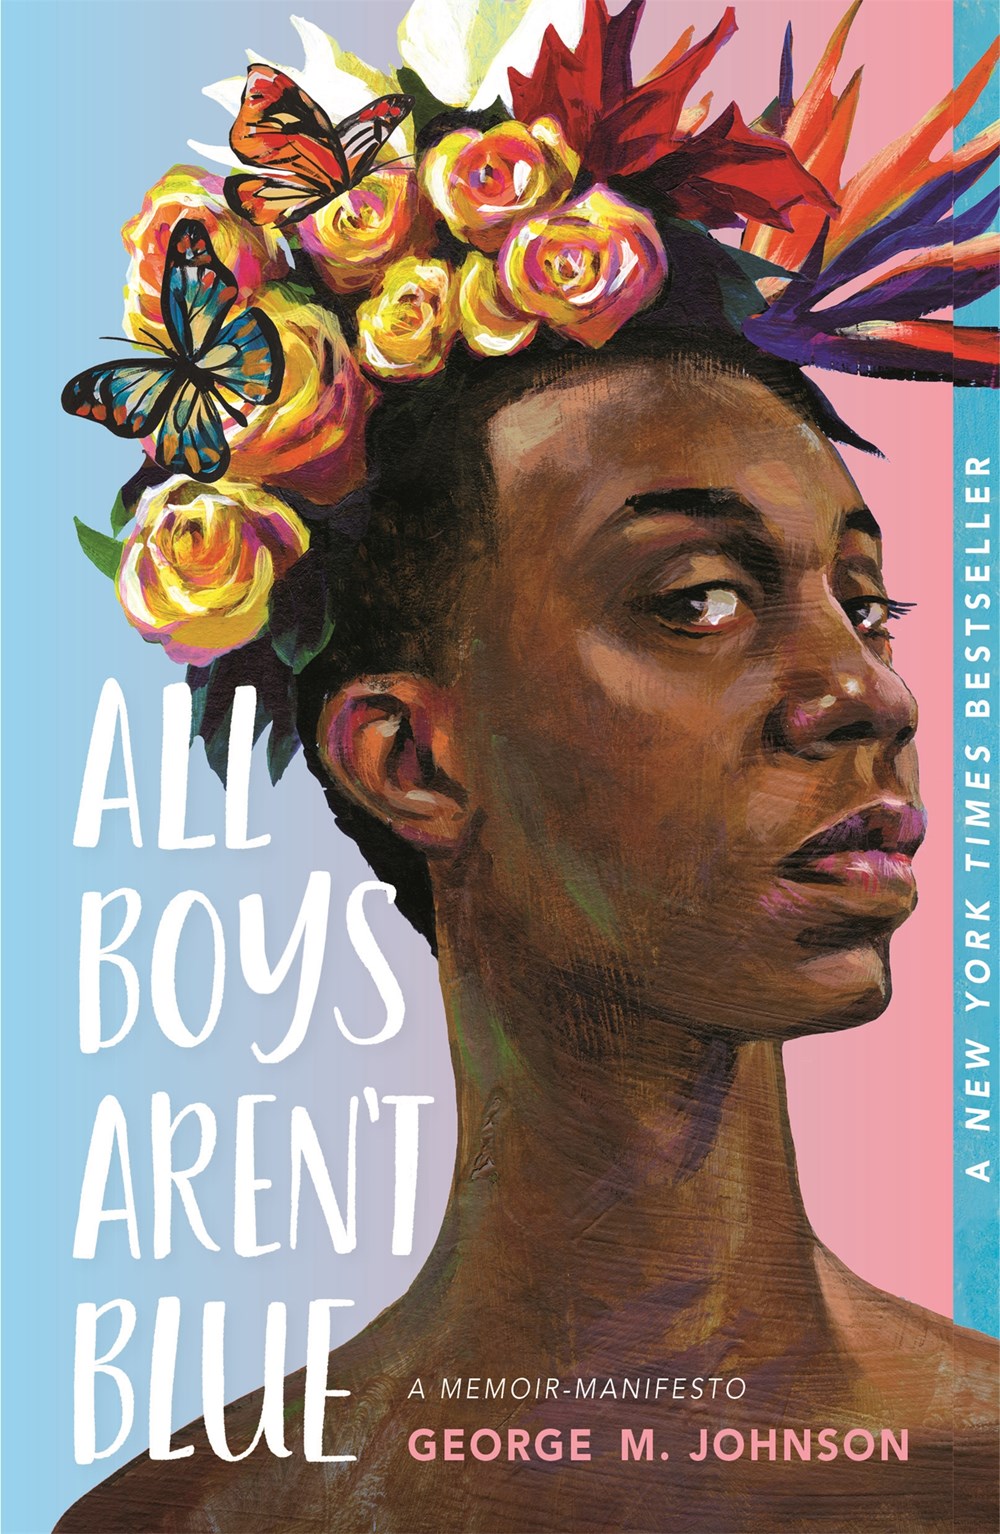 All Boys Aren't Blue: A Memoir Manifesto by George M. Johnson